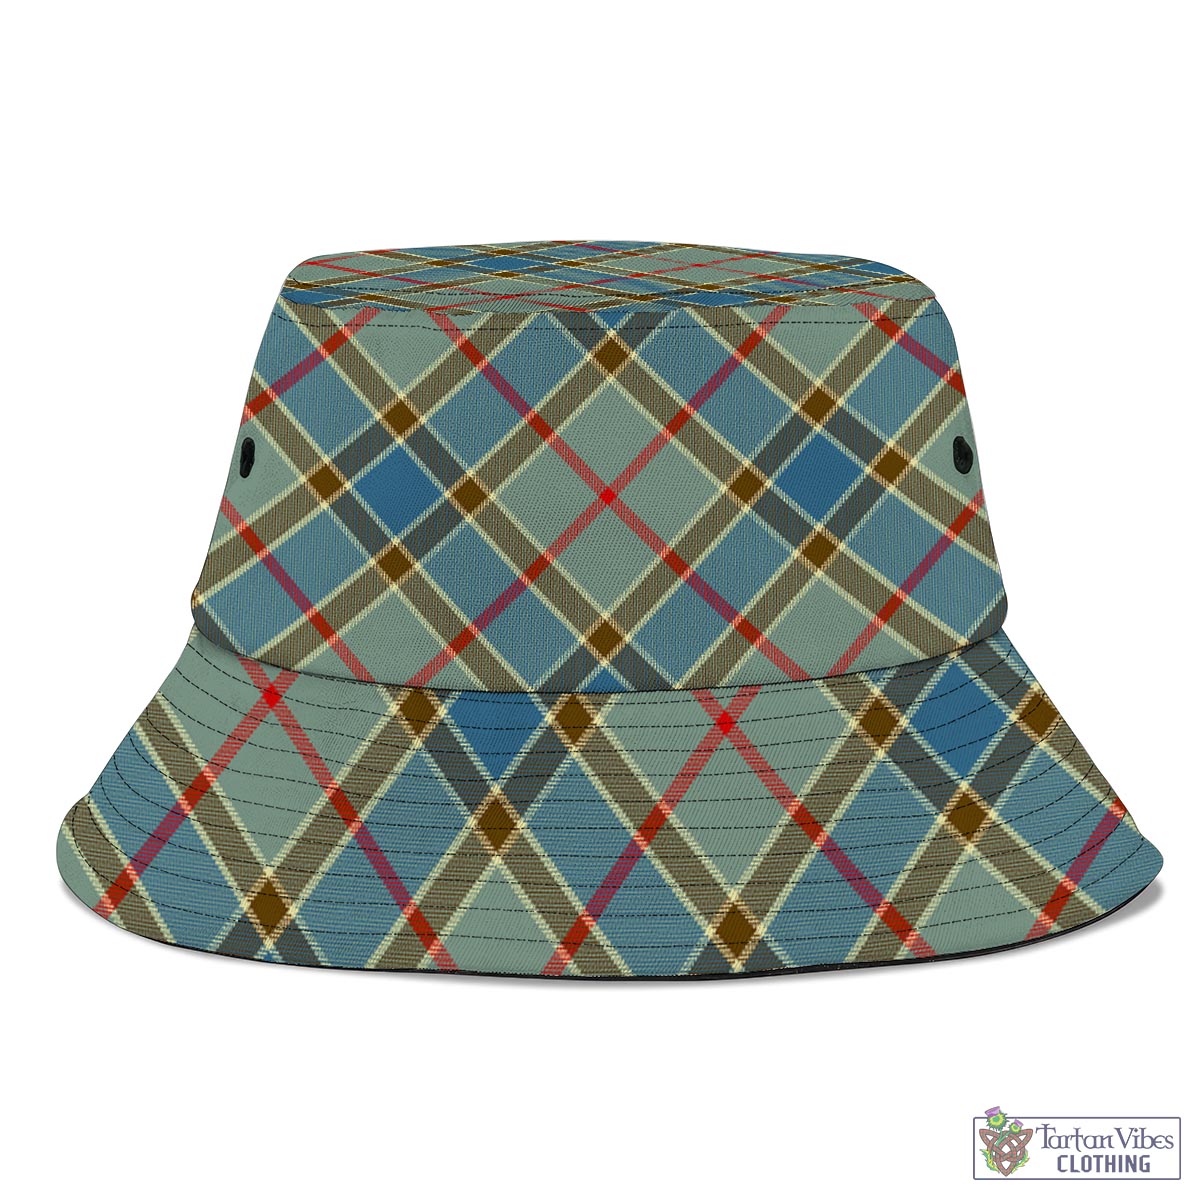 Tartan Vibes Clothing Balfour Blue Tartan Bucket Hat